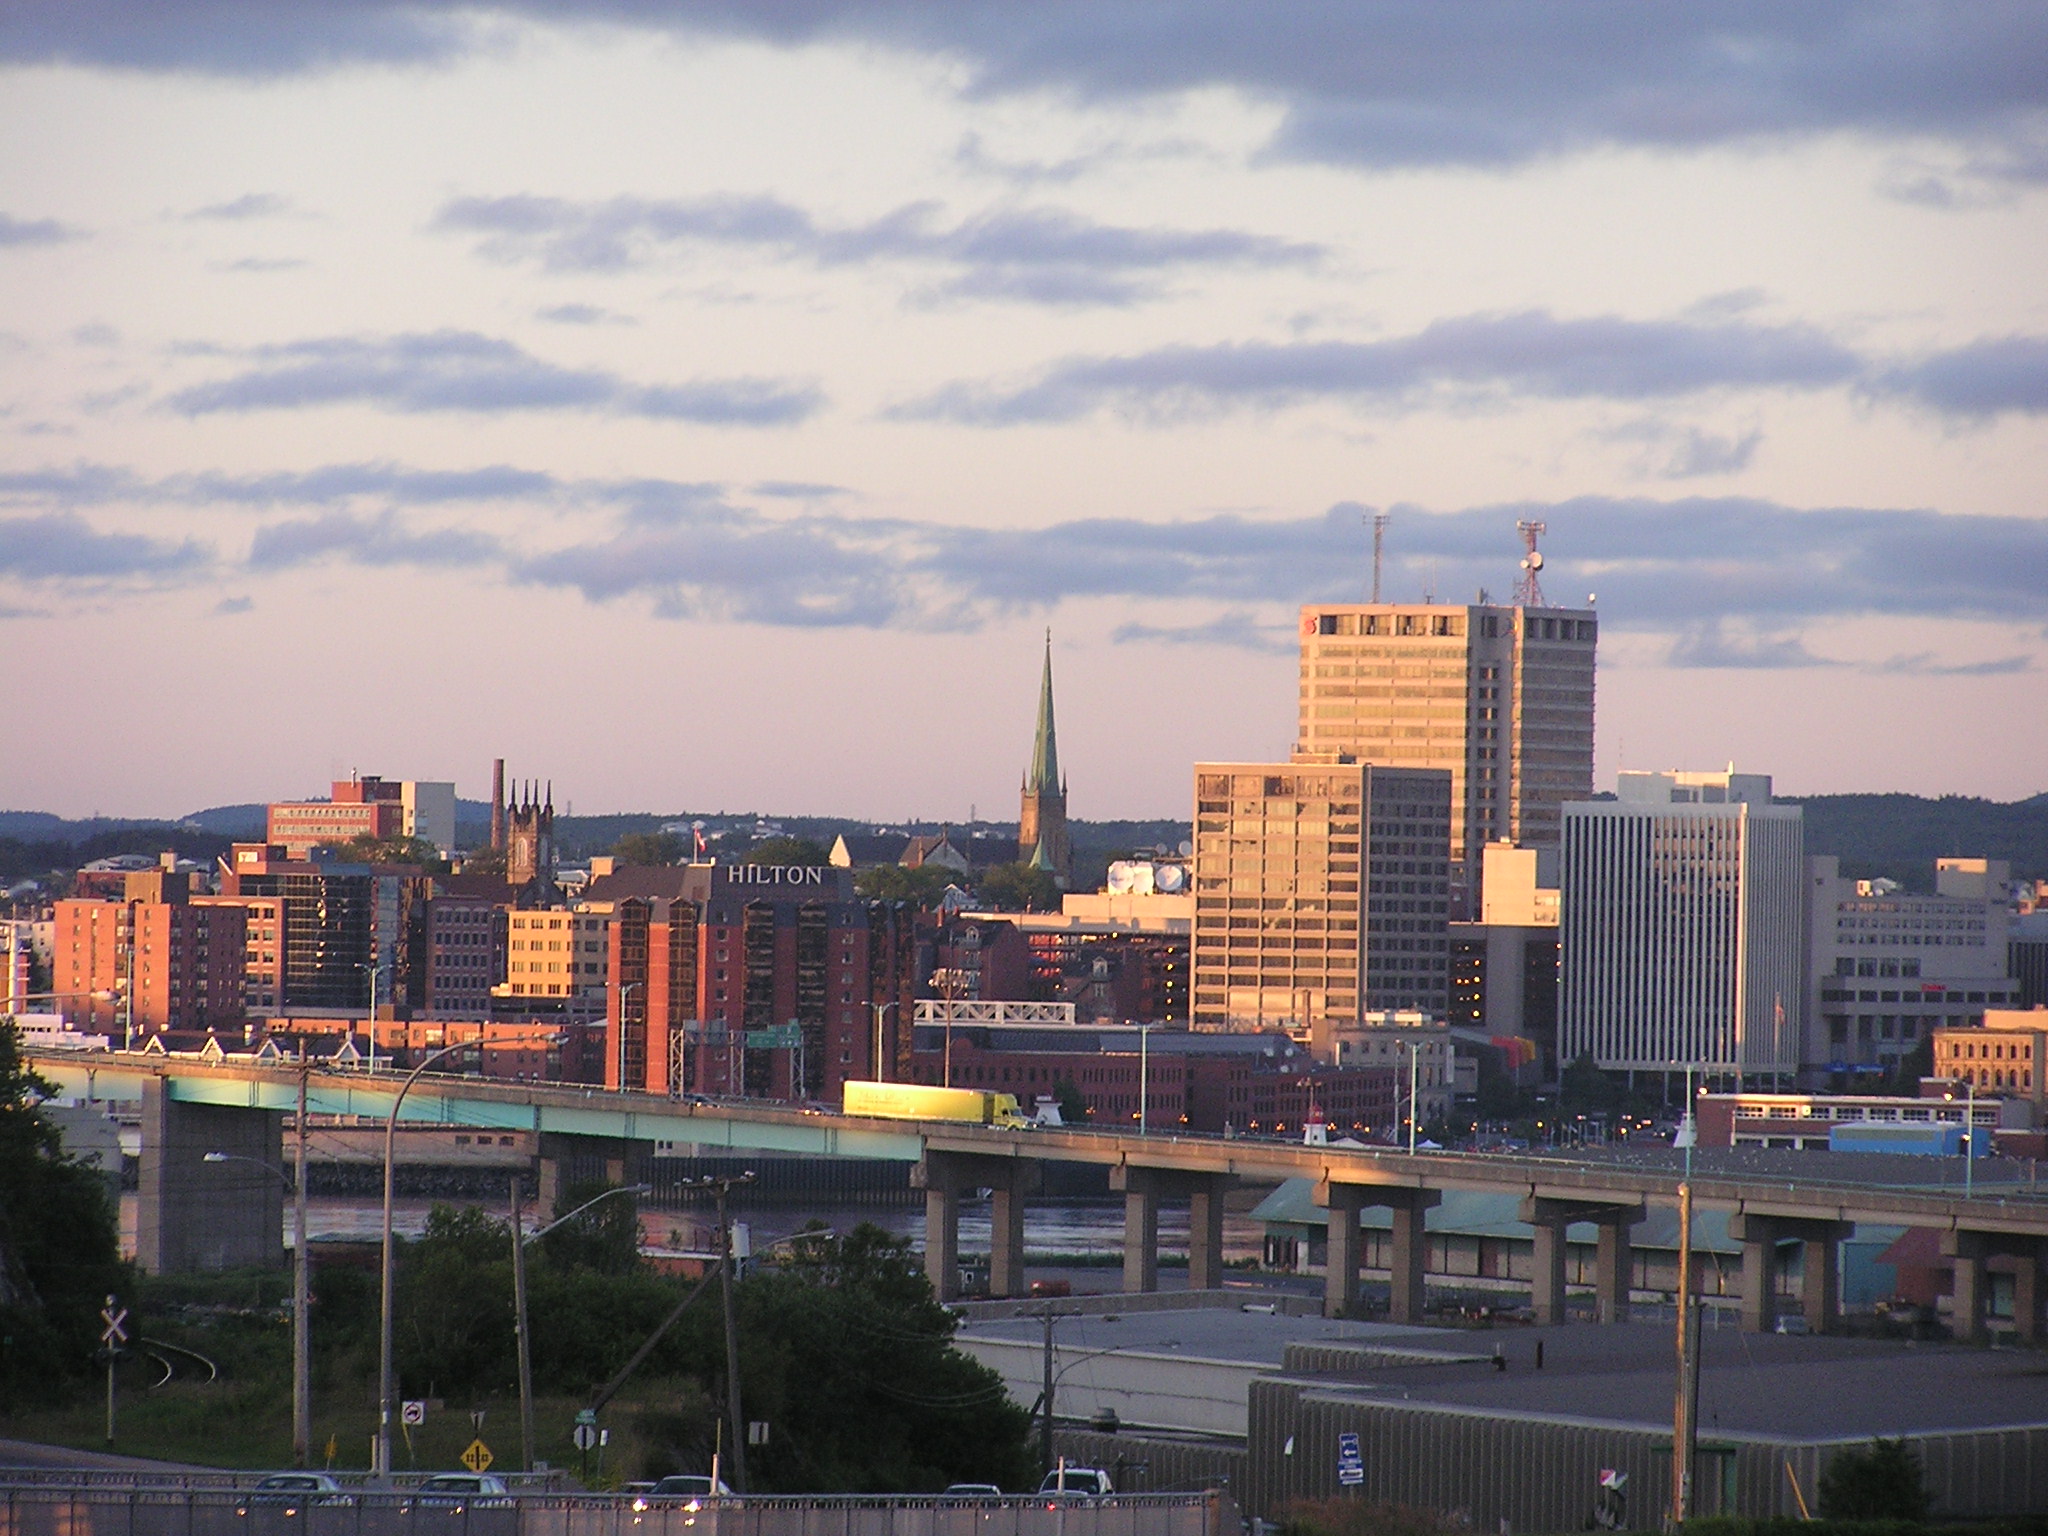 Saint John, New Brunswick, founded by Samuel de Champlain on Saint-Jean-Baptiste Day in 1631.